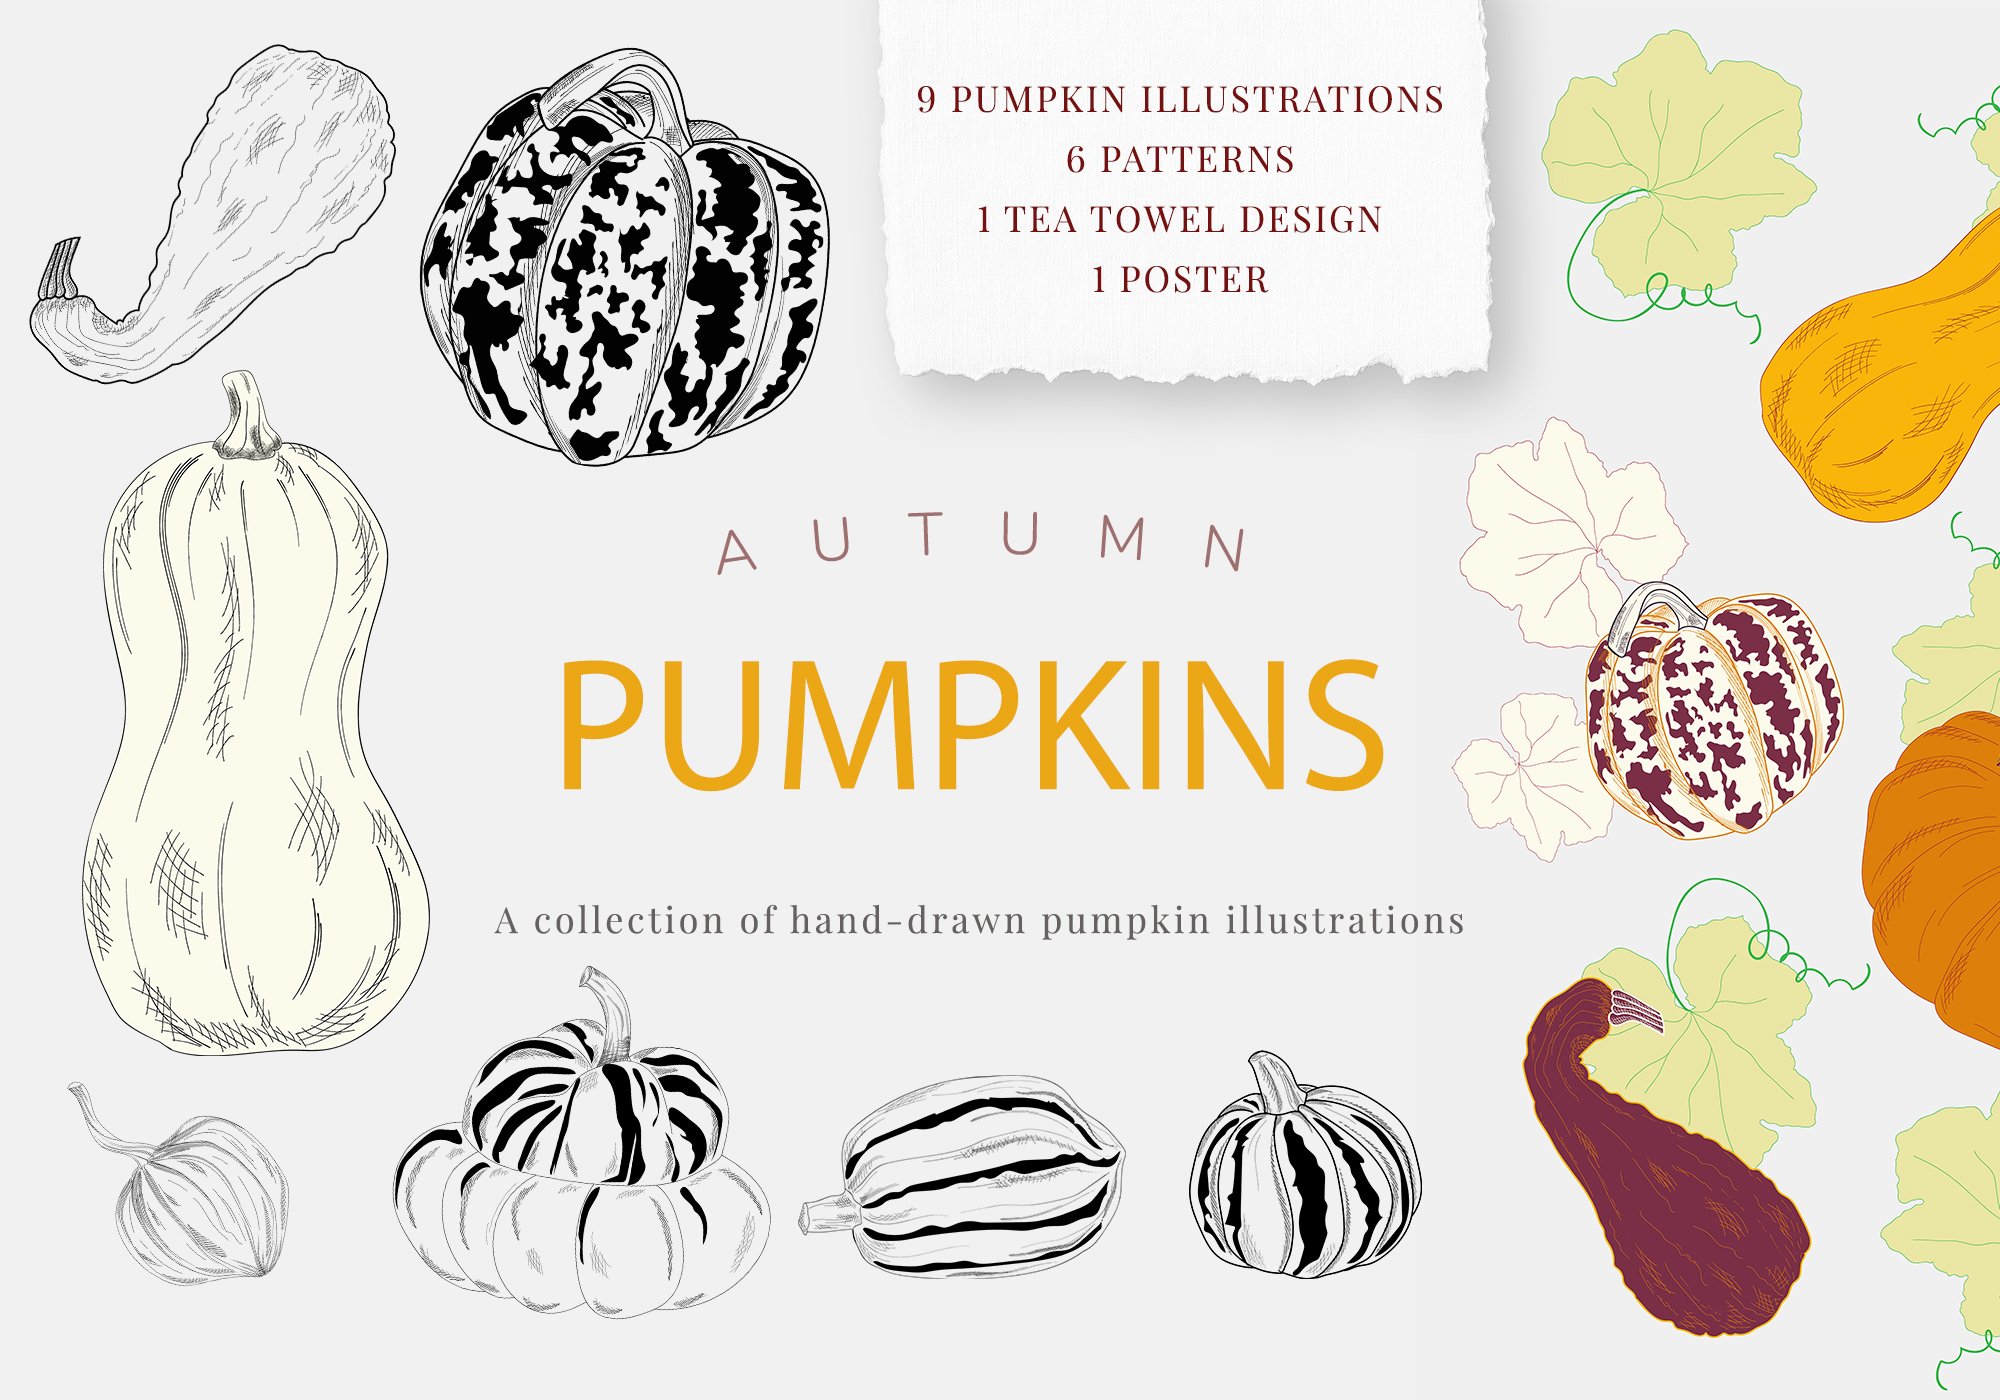 Pumpkins, hand drawn illustrations cover image.